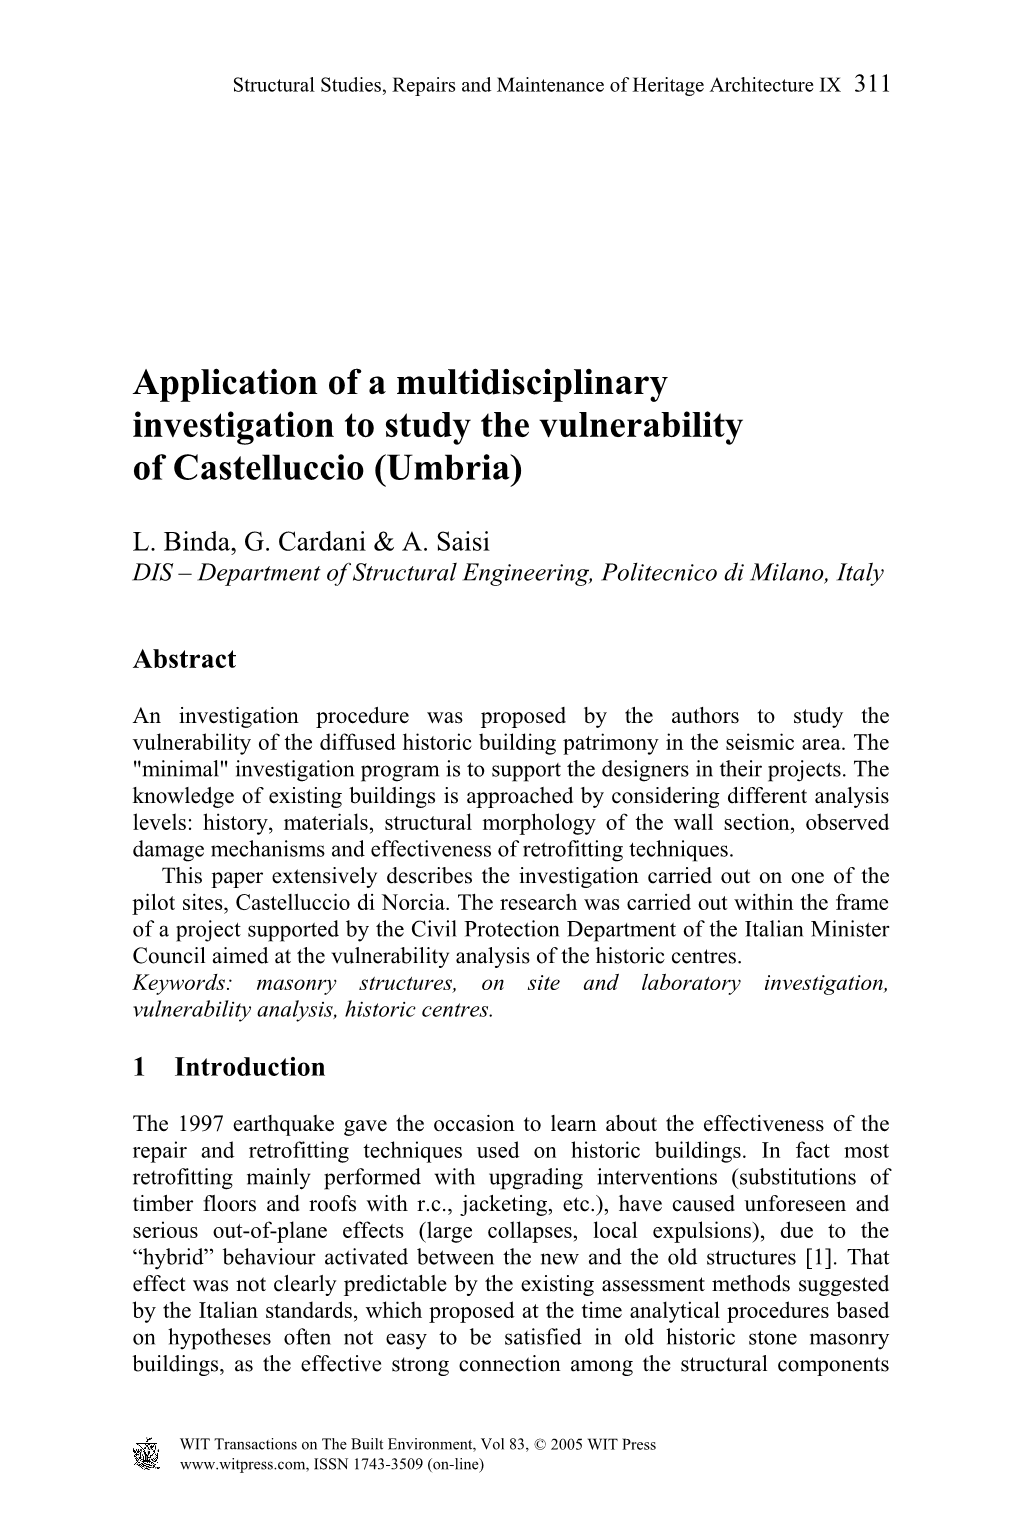 Application of a Multidisciplinary Investigation to Study the Vulnerability of Castelluccio (Umbria)